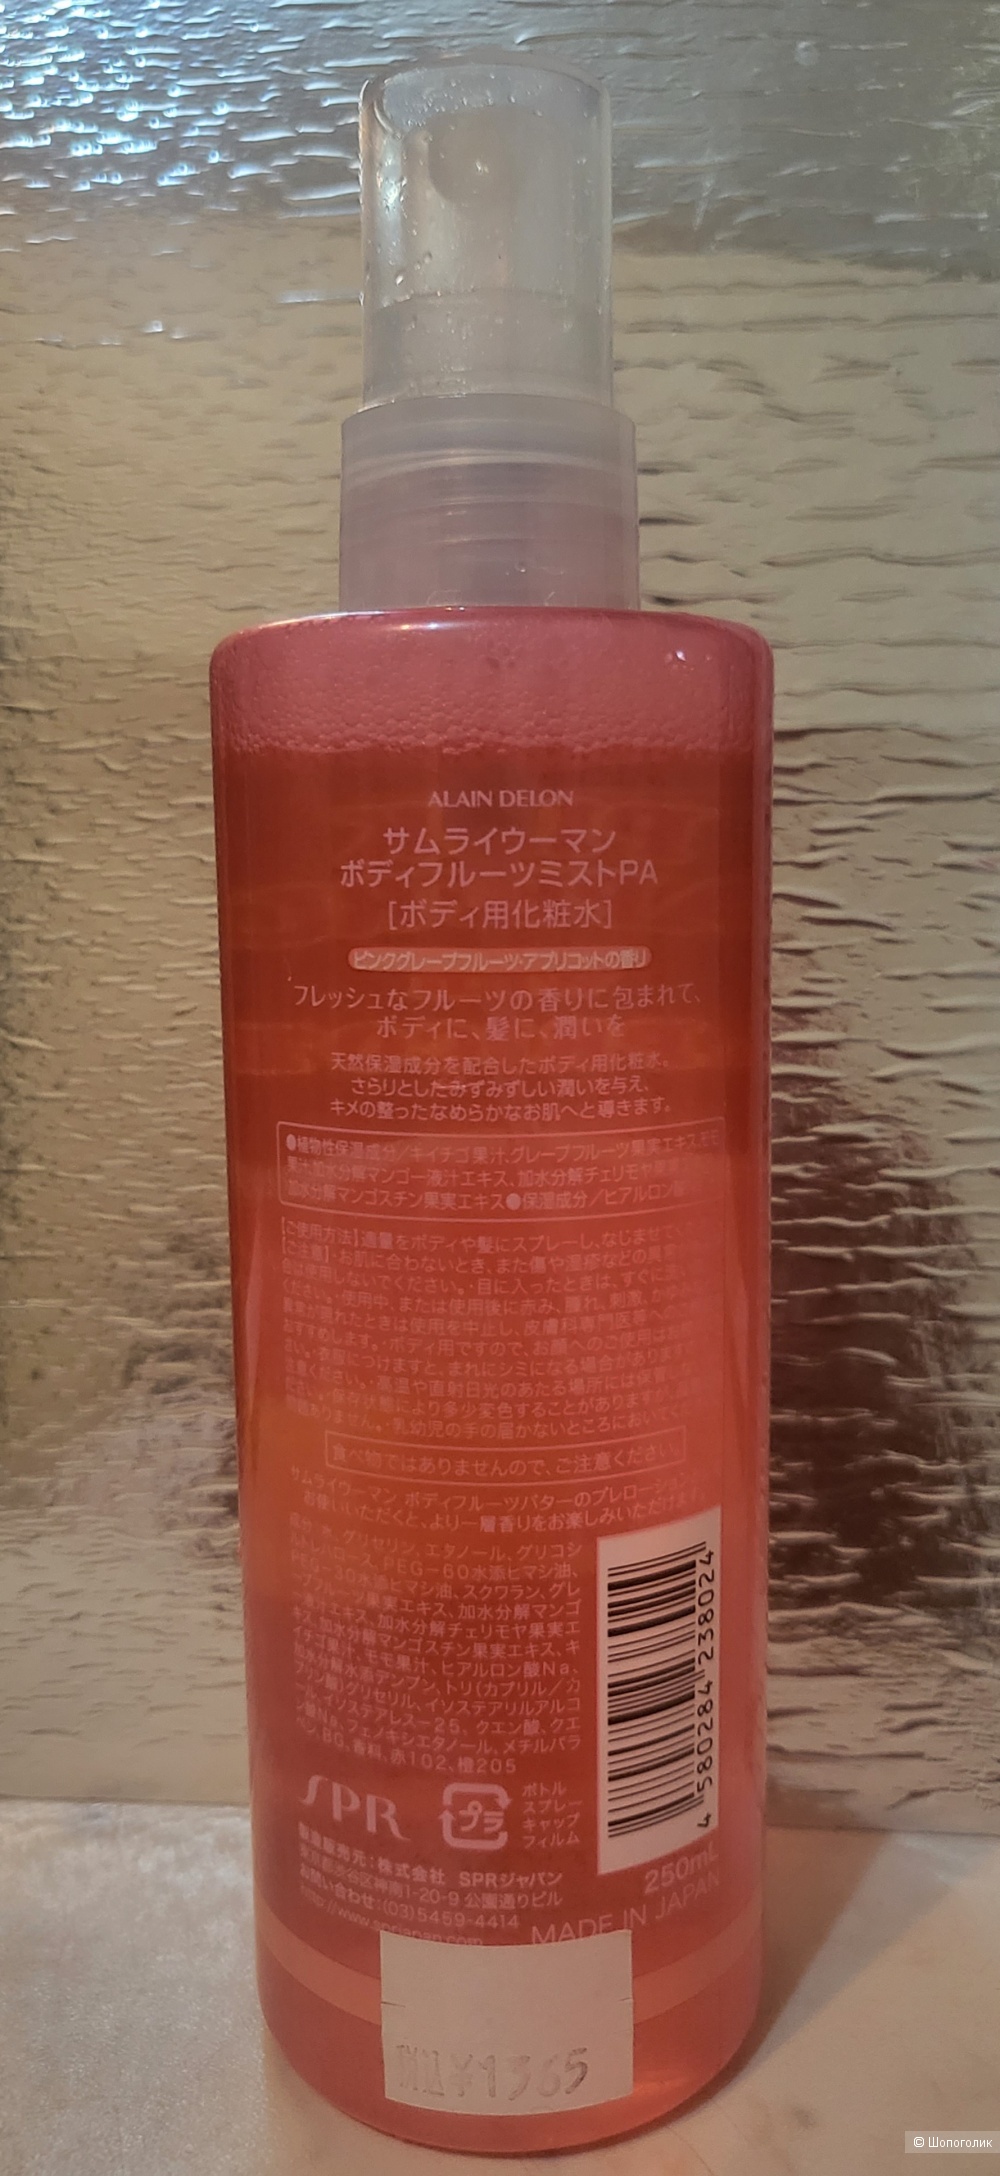 Мист( дымка) для тела Samurai  от Alain Delon . Грейпфрут и абрикос. Объем 250 ml.